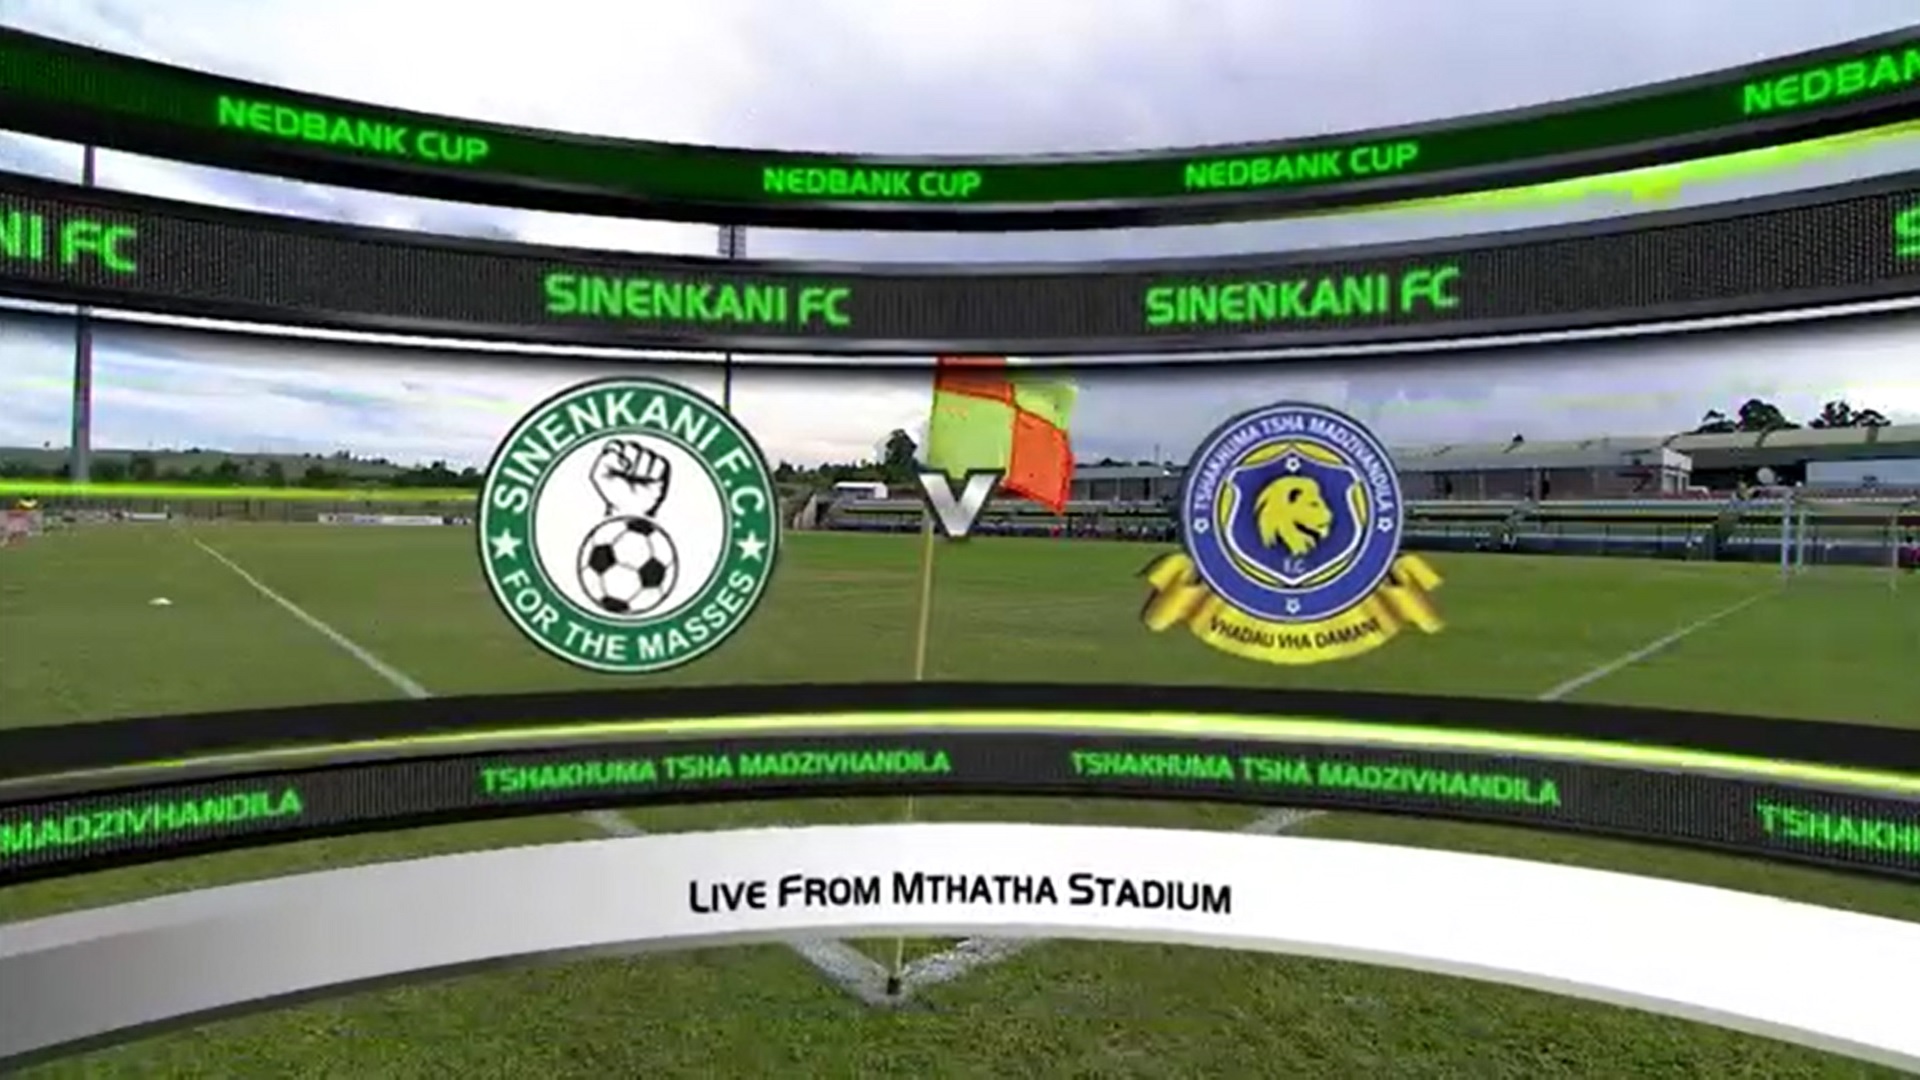 Nedbank Cup | Sinenkani FC v Tshakhuma Tsha Madzivhandila | Extended Highlights